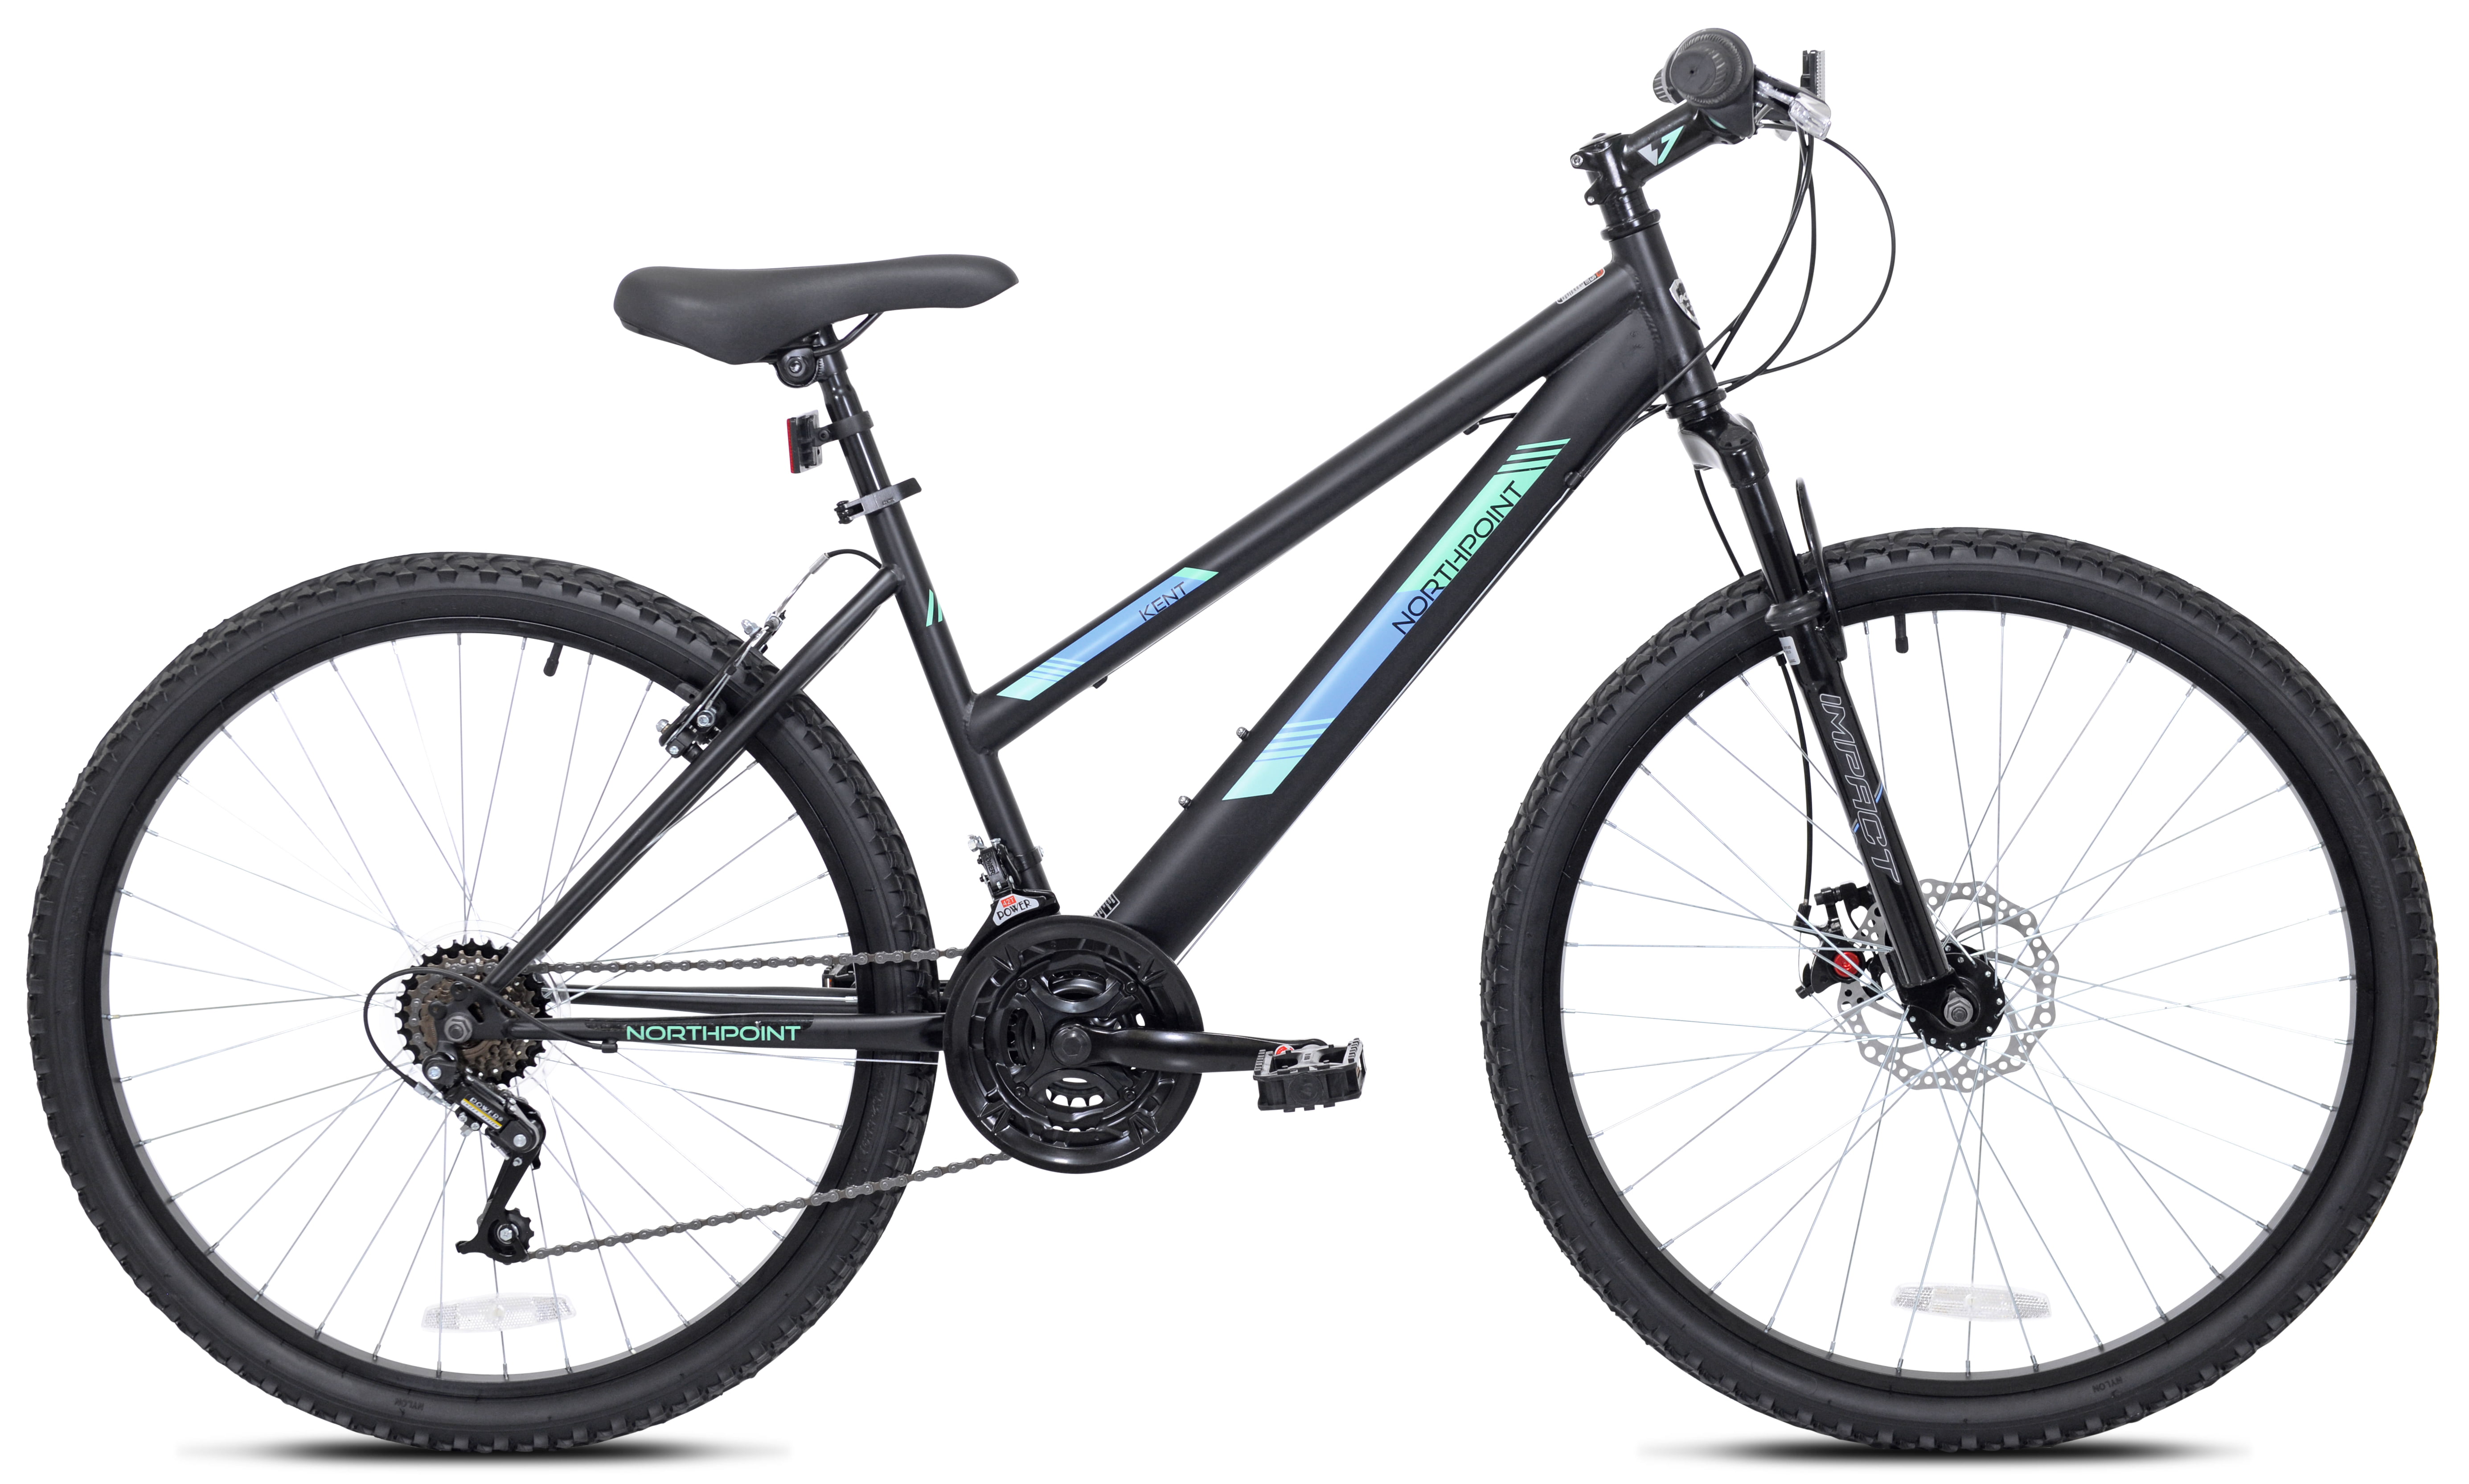 Kent 26" Northpoint Women's Mountain Bike (Black/Blue) $98 + free s/h